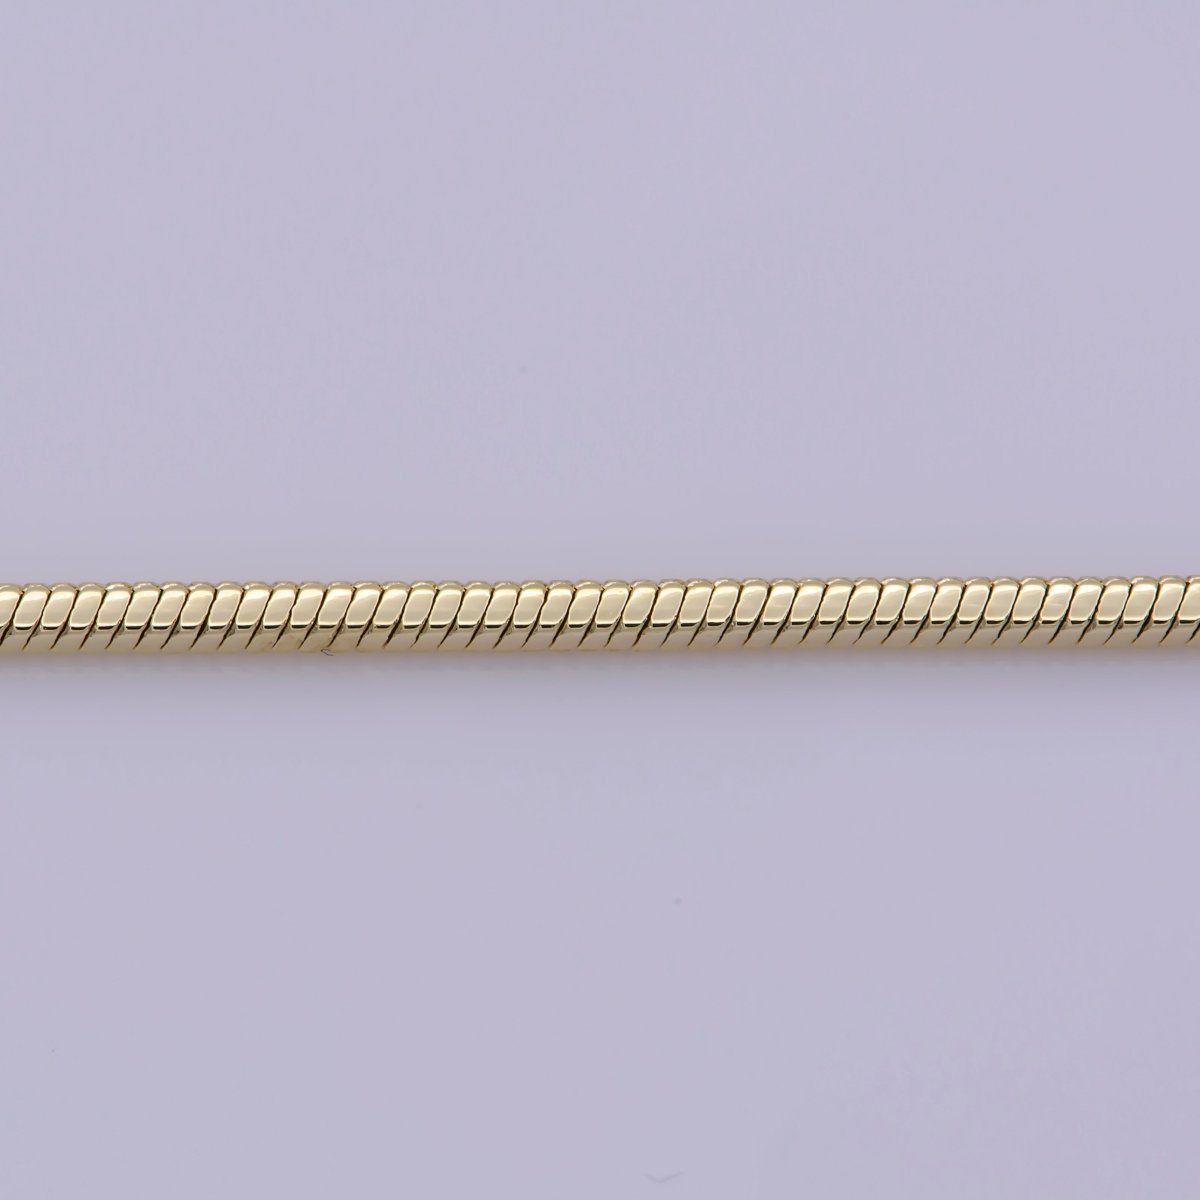 1.3mm Snake Herringbone 18 Inch, 20 Inch Layering Chain Necklace | WA-402 WA-403 Clearance Pricing - DLUXCA